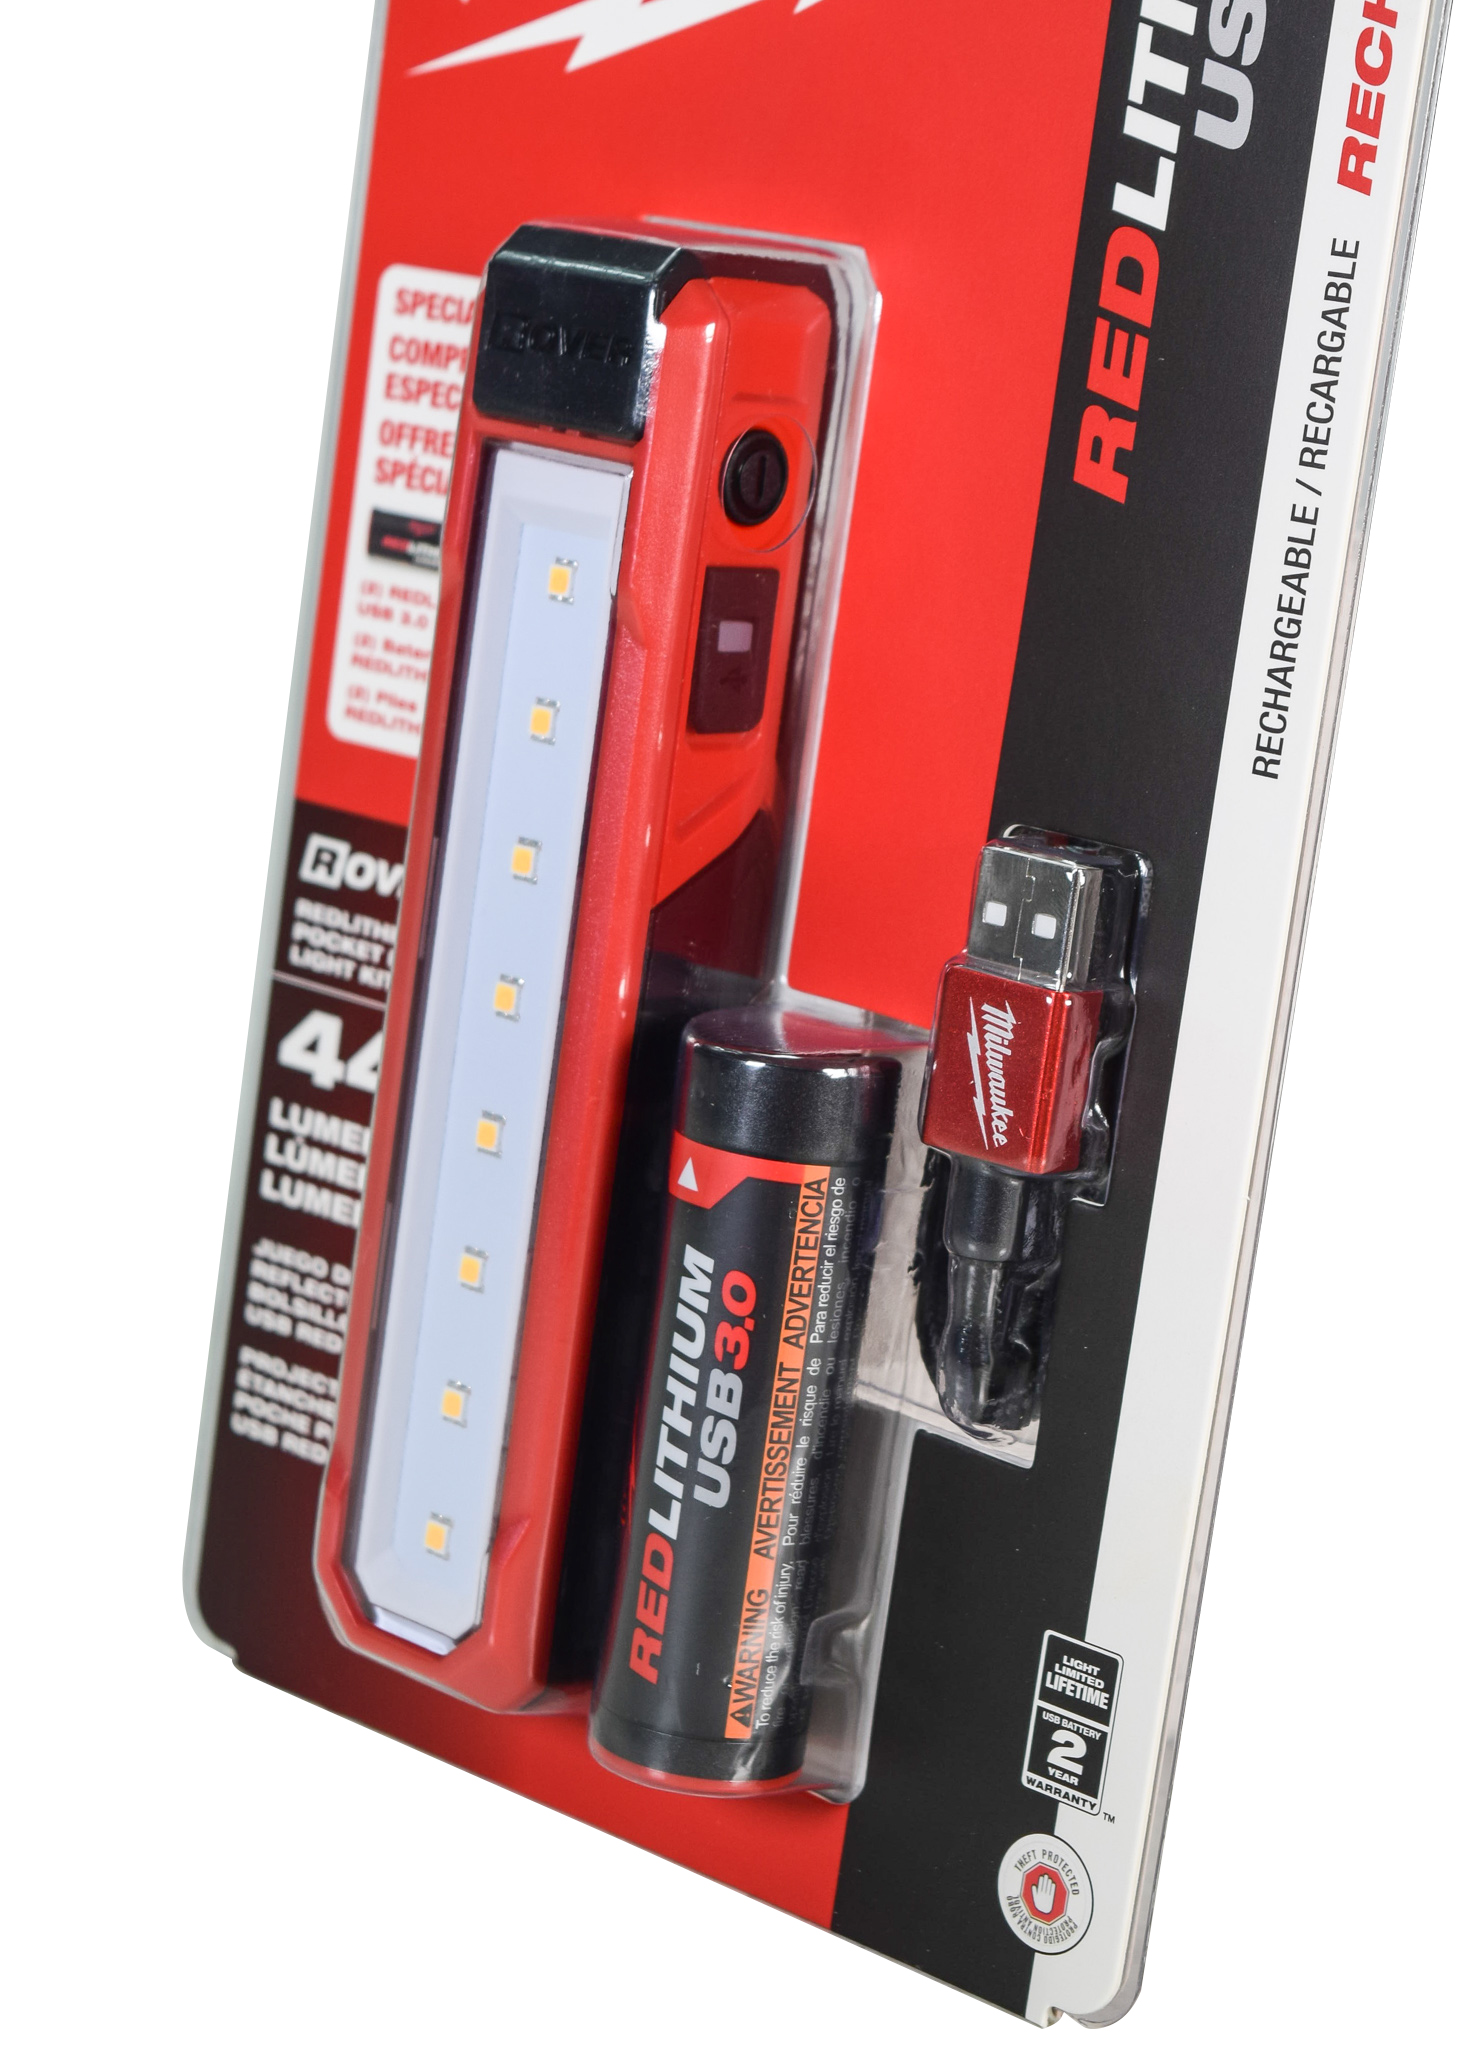 Milwaukee 2112-22H 445 Lumens LED USB Rover Pocket Flood Light Kit with (2)  USB 3.0 Ah Batteries